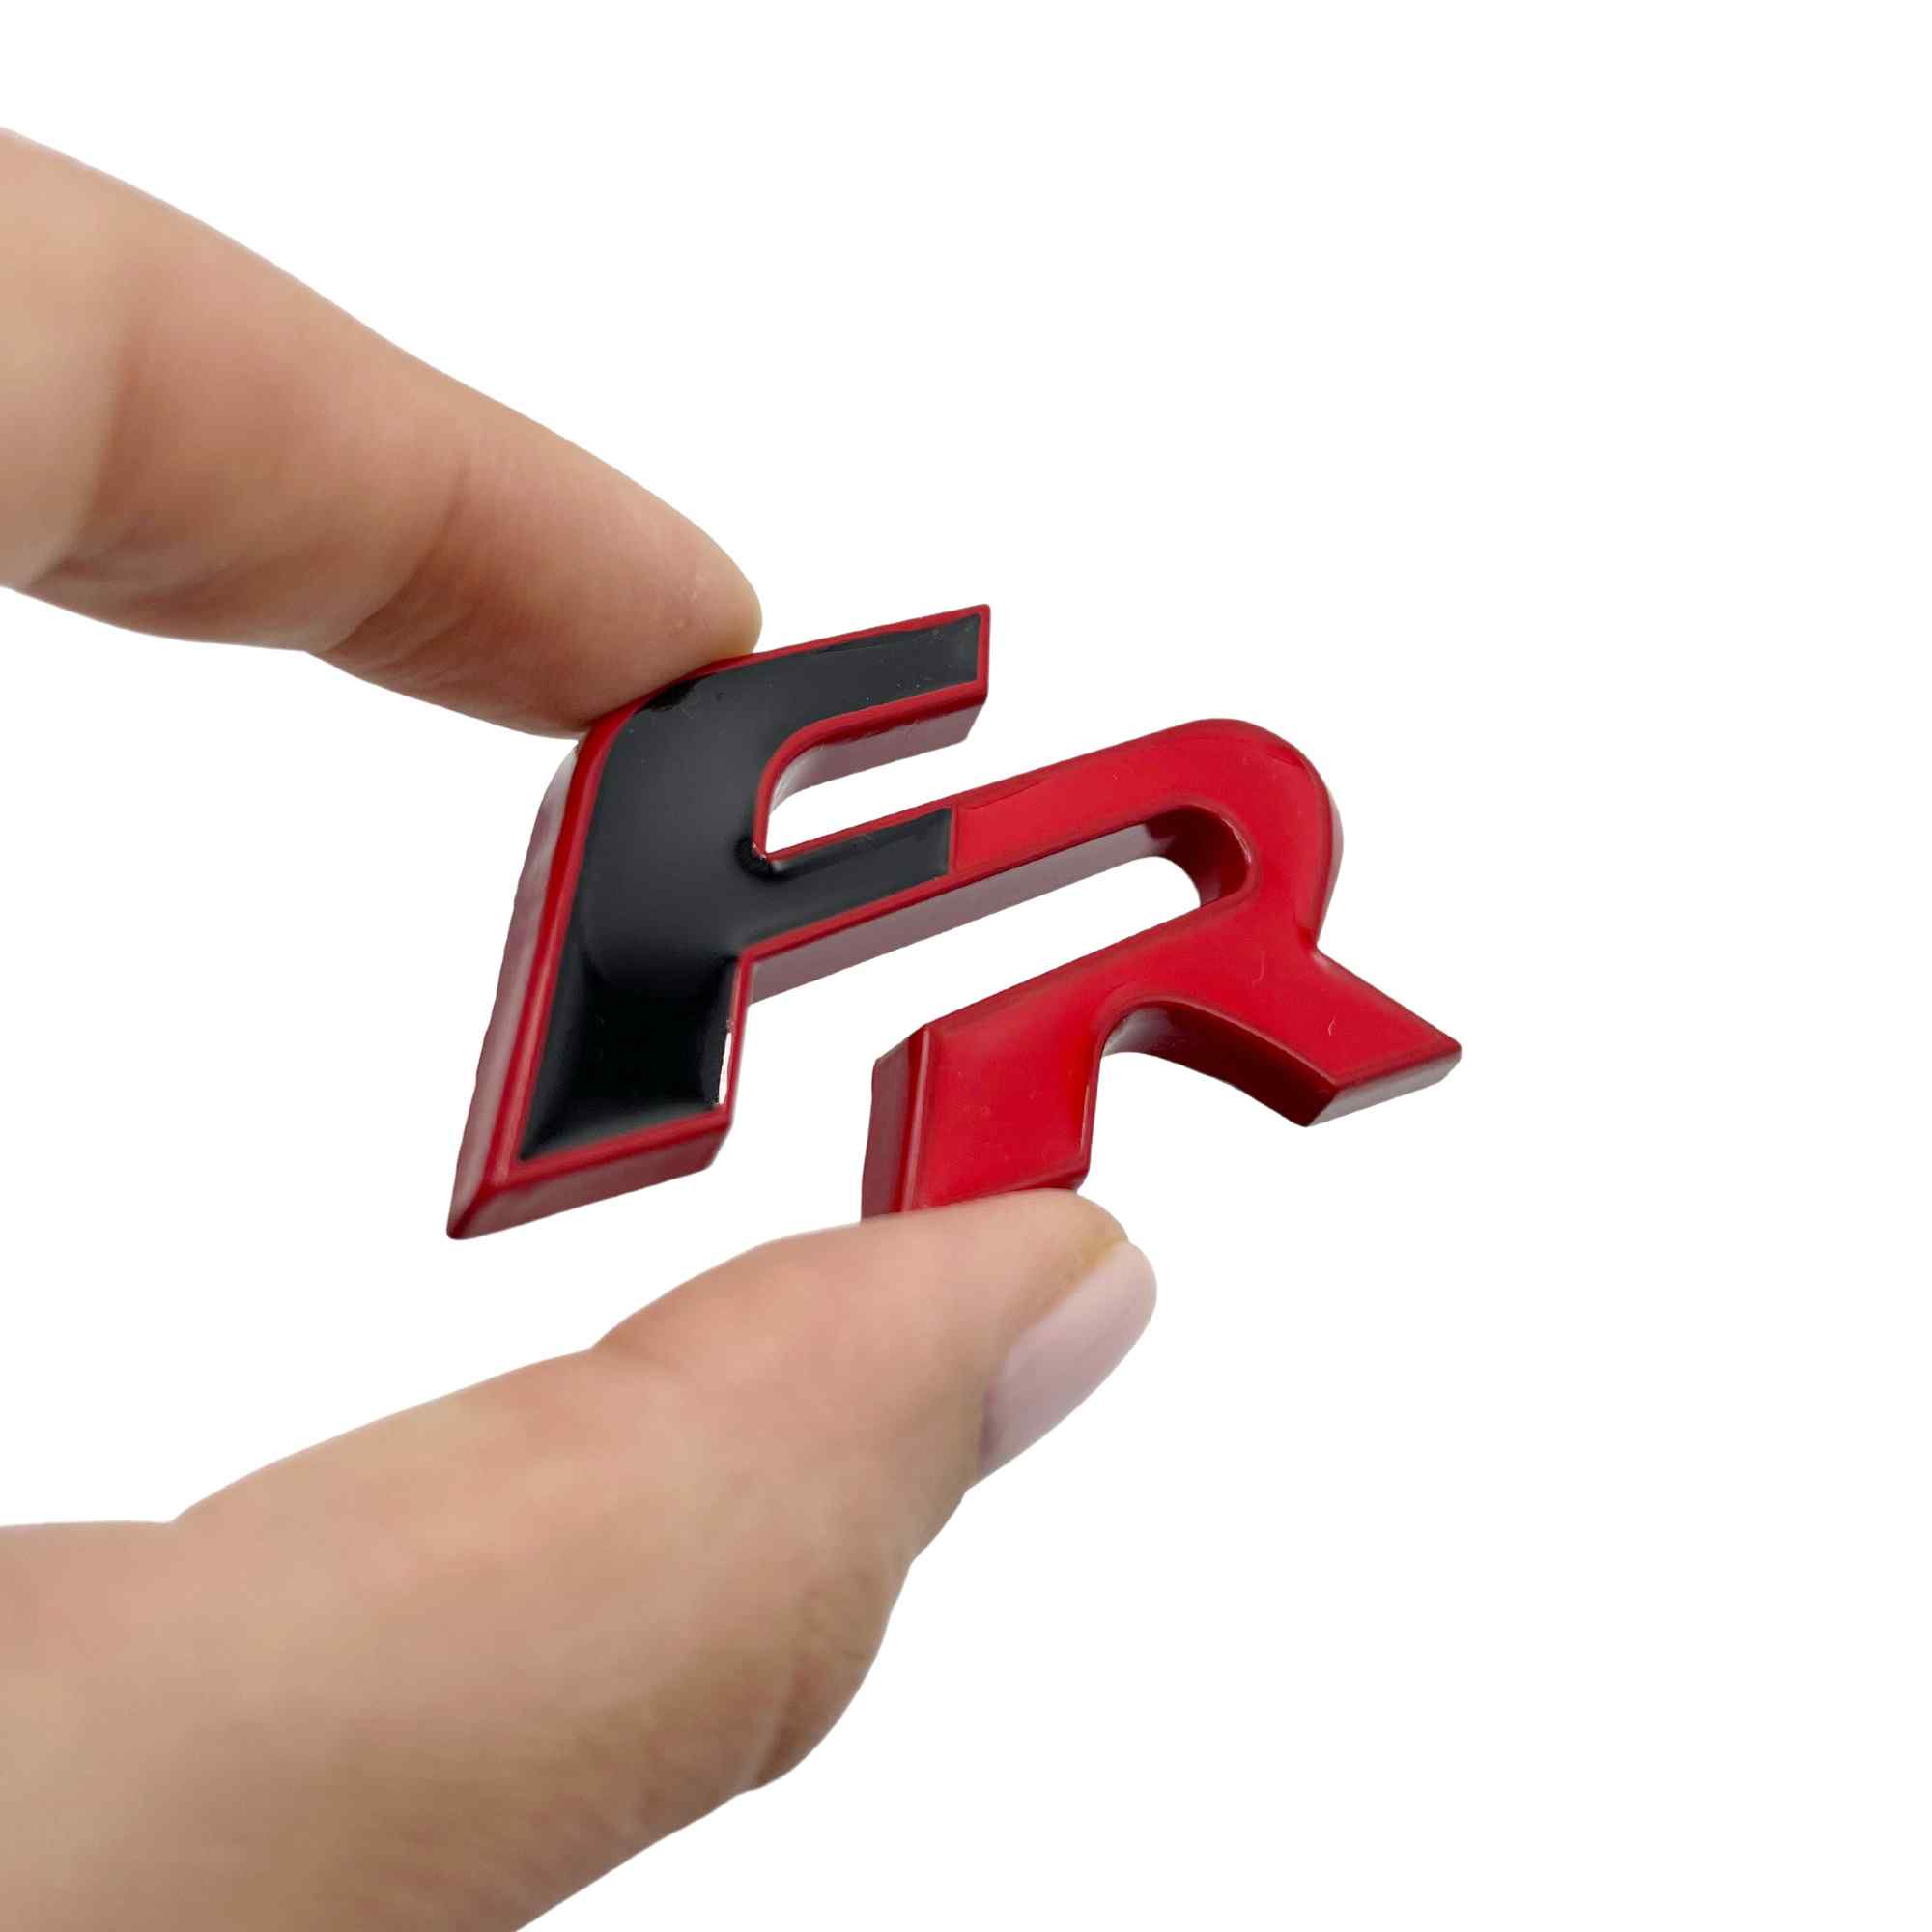 Emblema original FR de Seat Logotipo para parrilla cromado / rojo